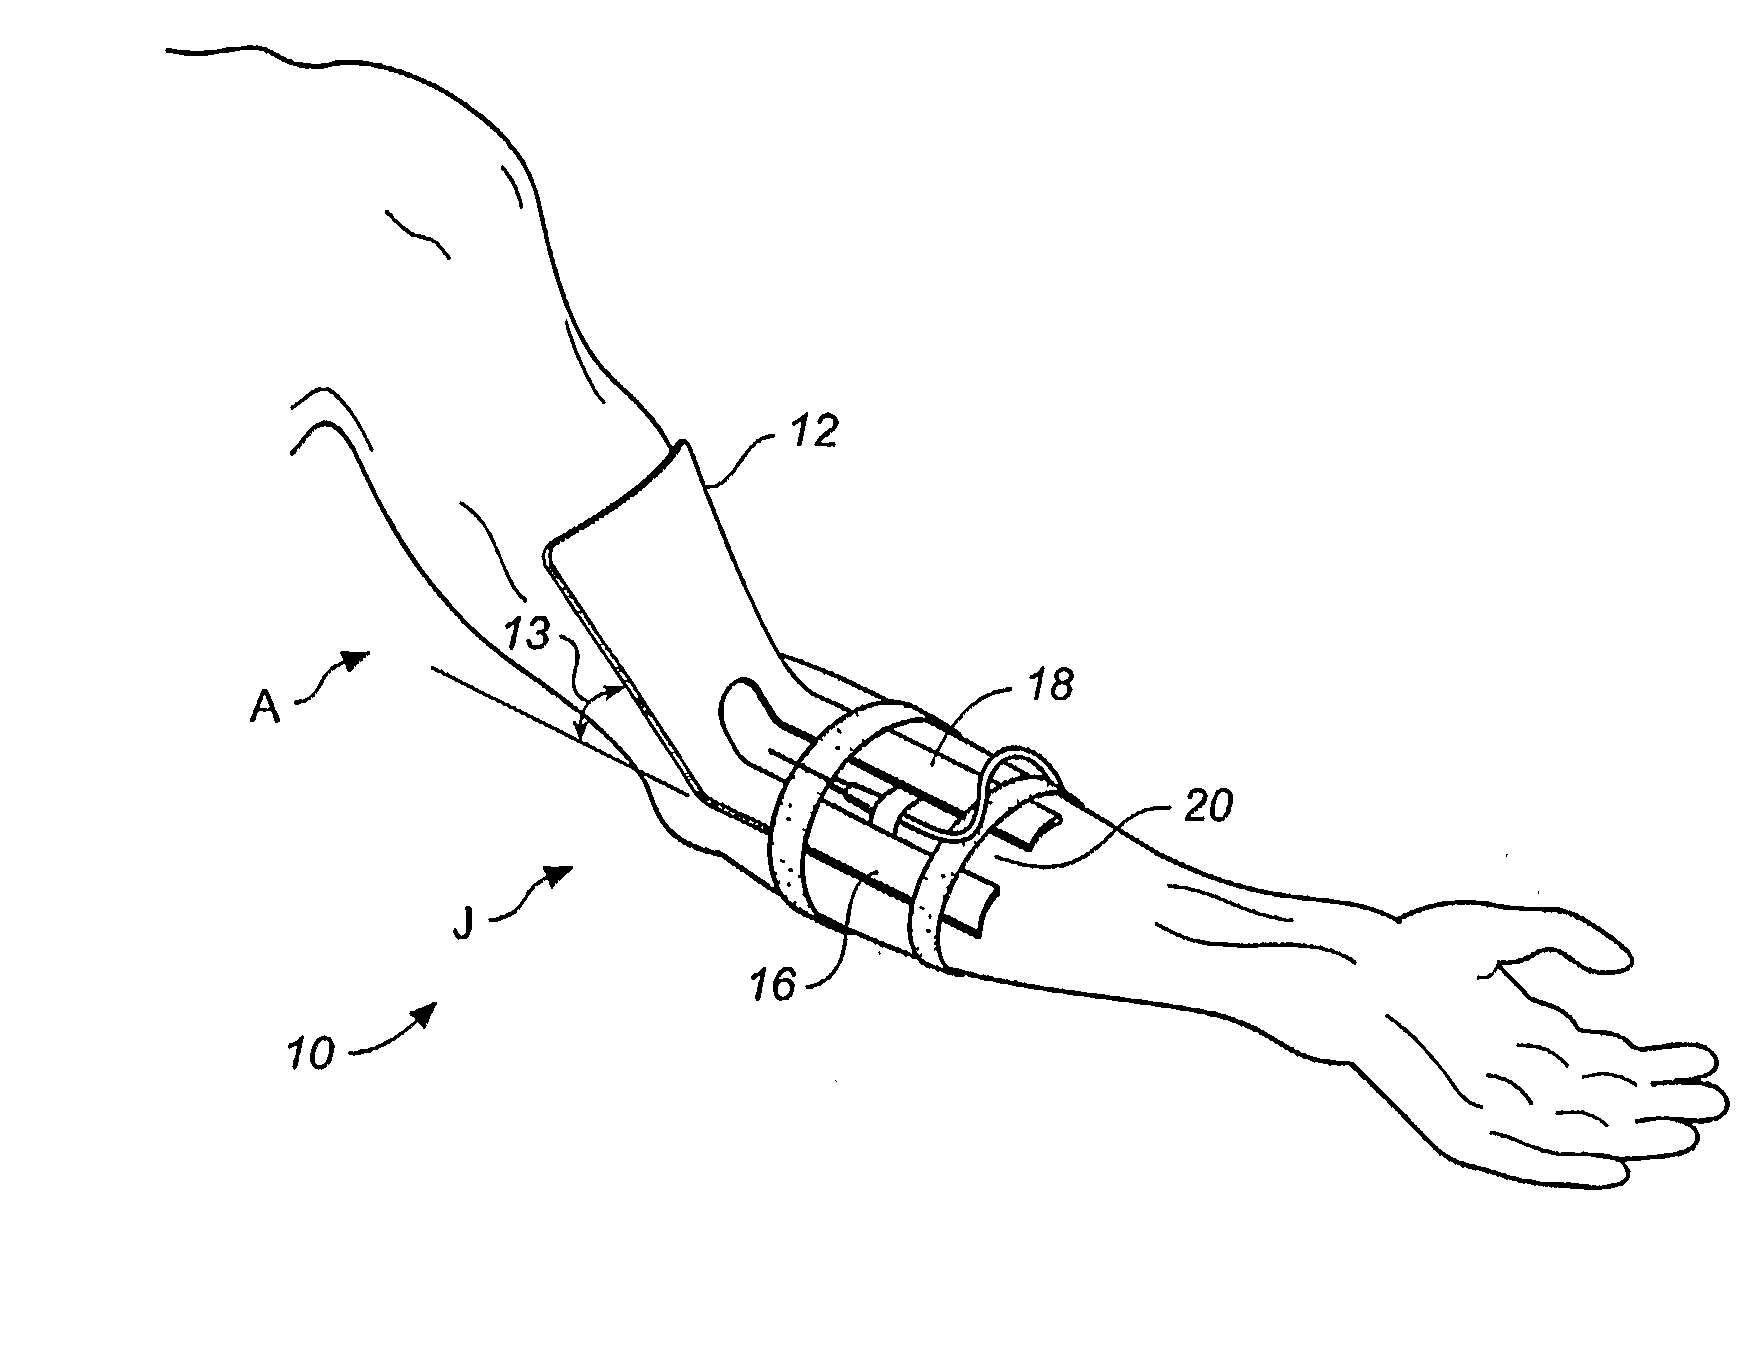 IV Compatible limb stabilization apparatus